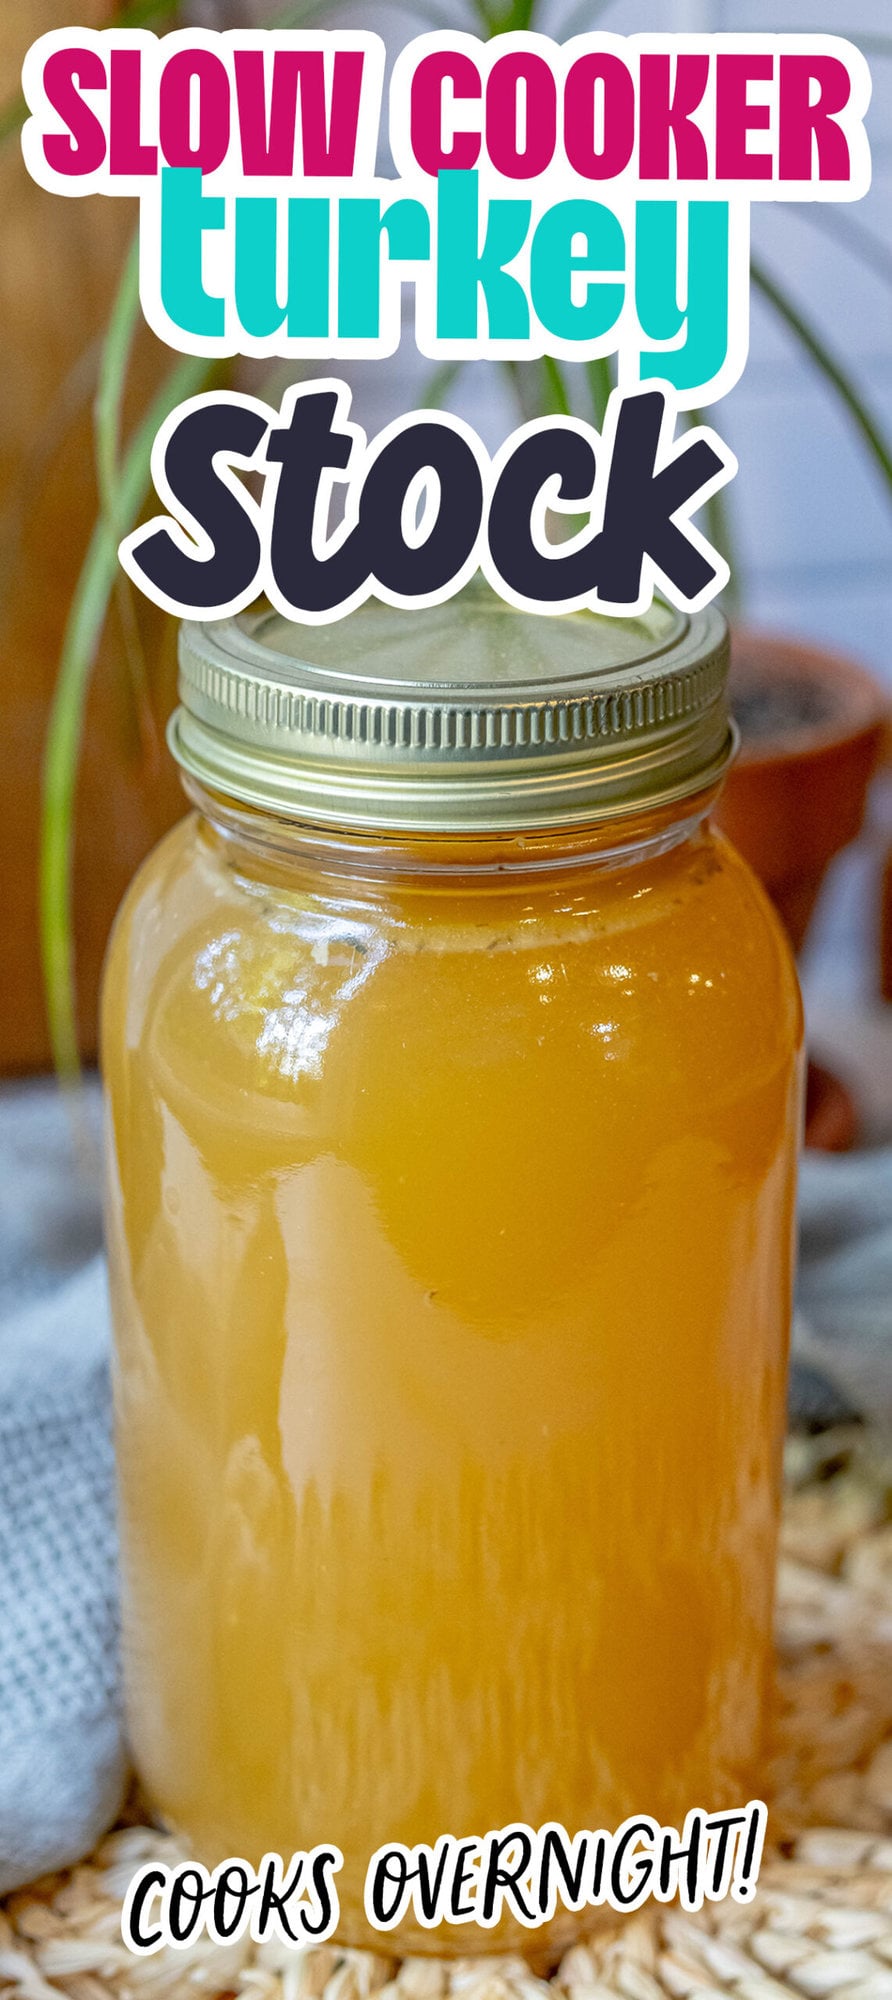 jar of yellow stock